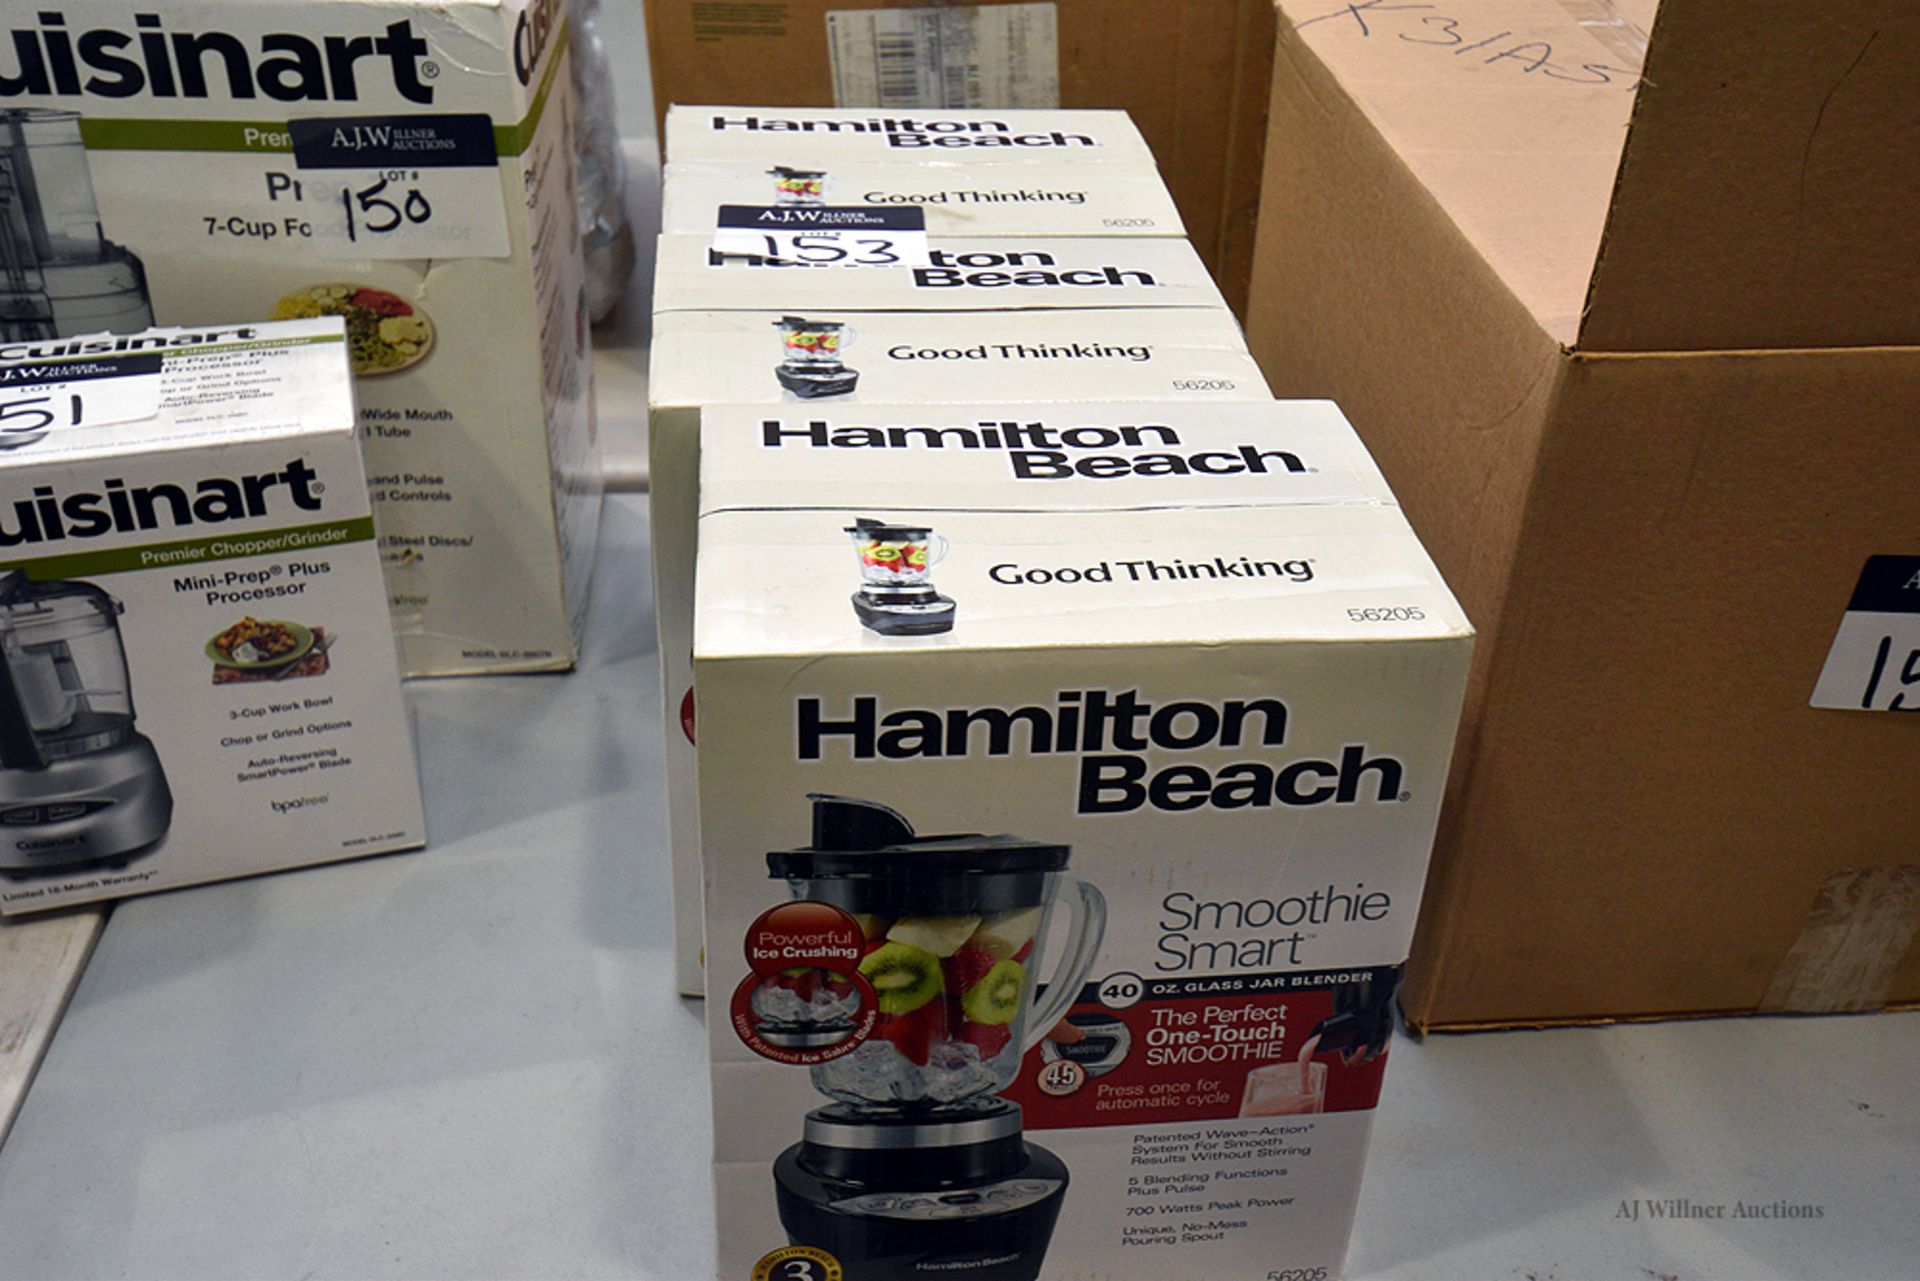 Hamilton Beach, "Smoothie Smart" Blender, Model 56205 - Image 3 of 3